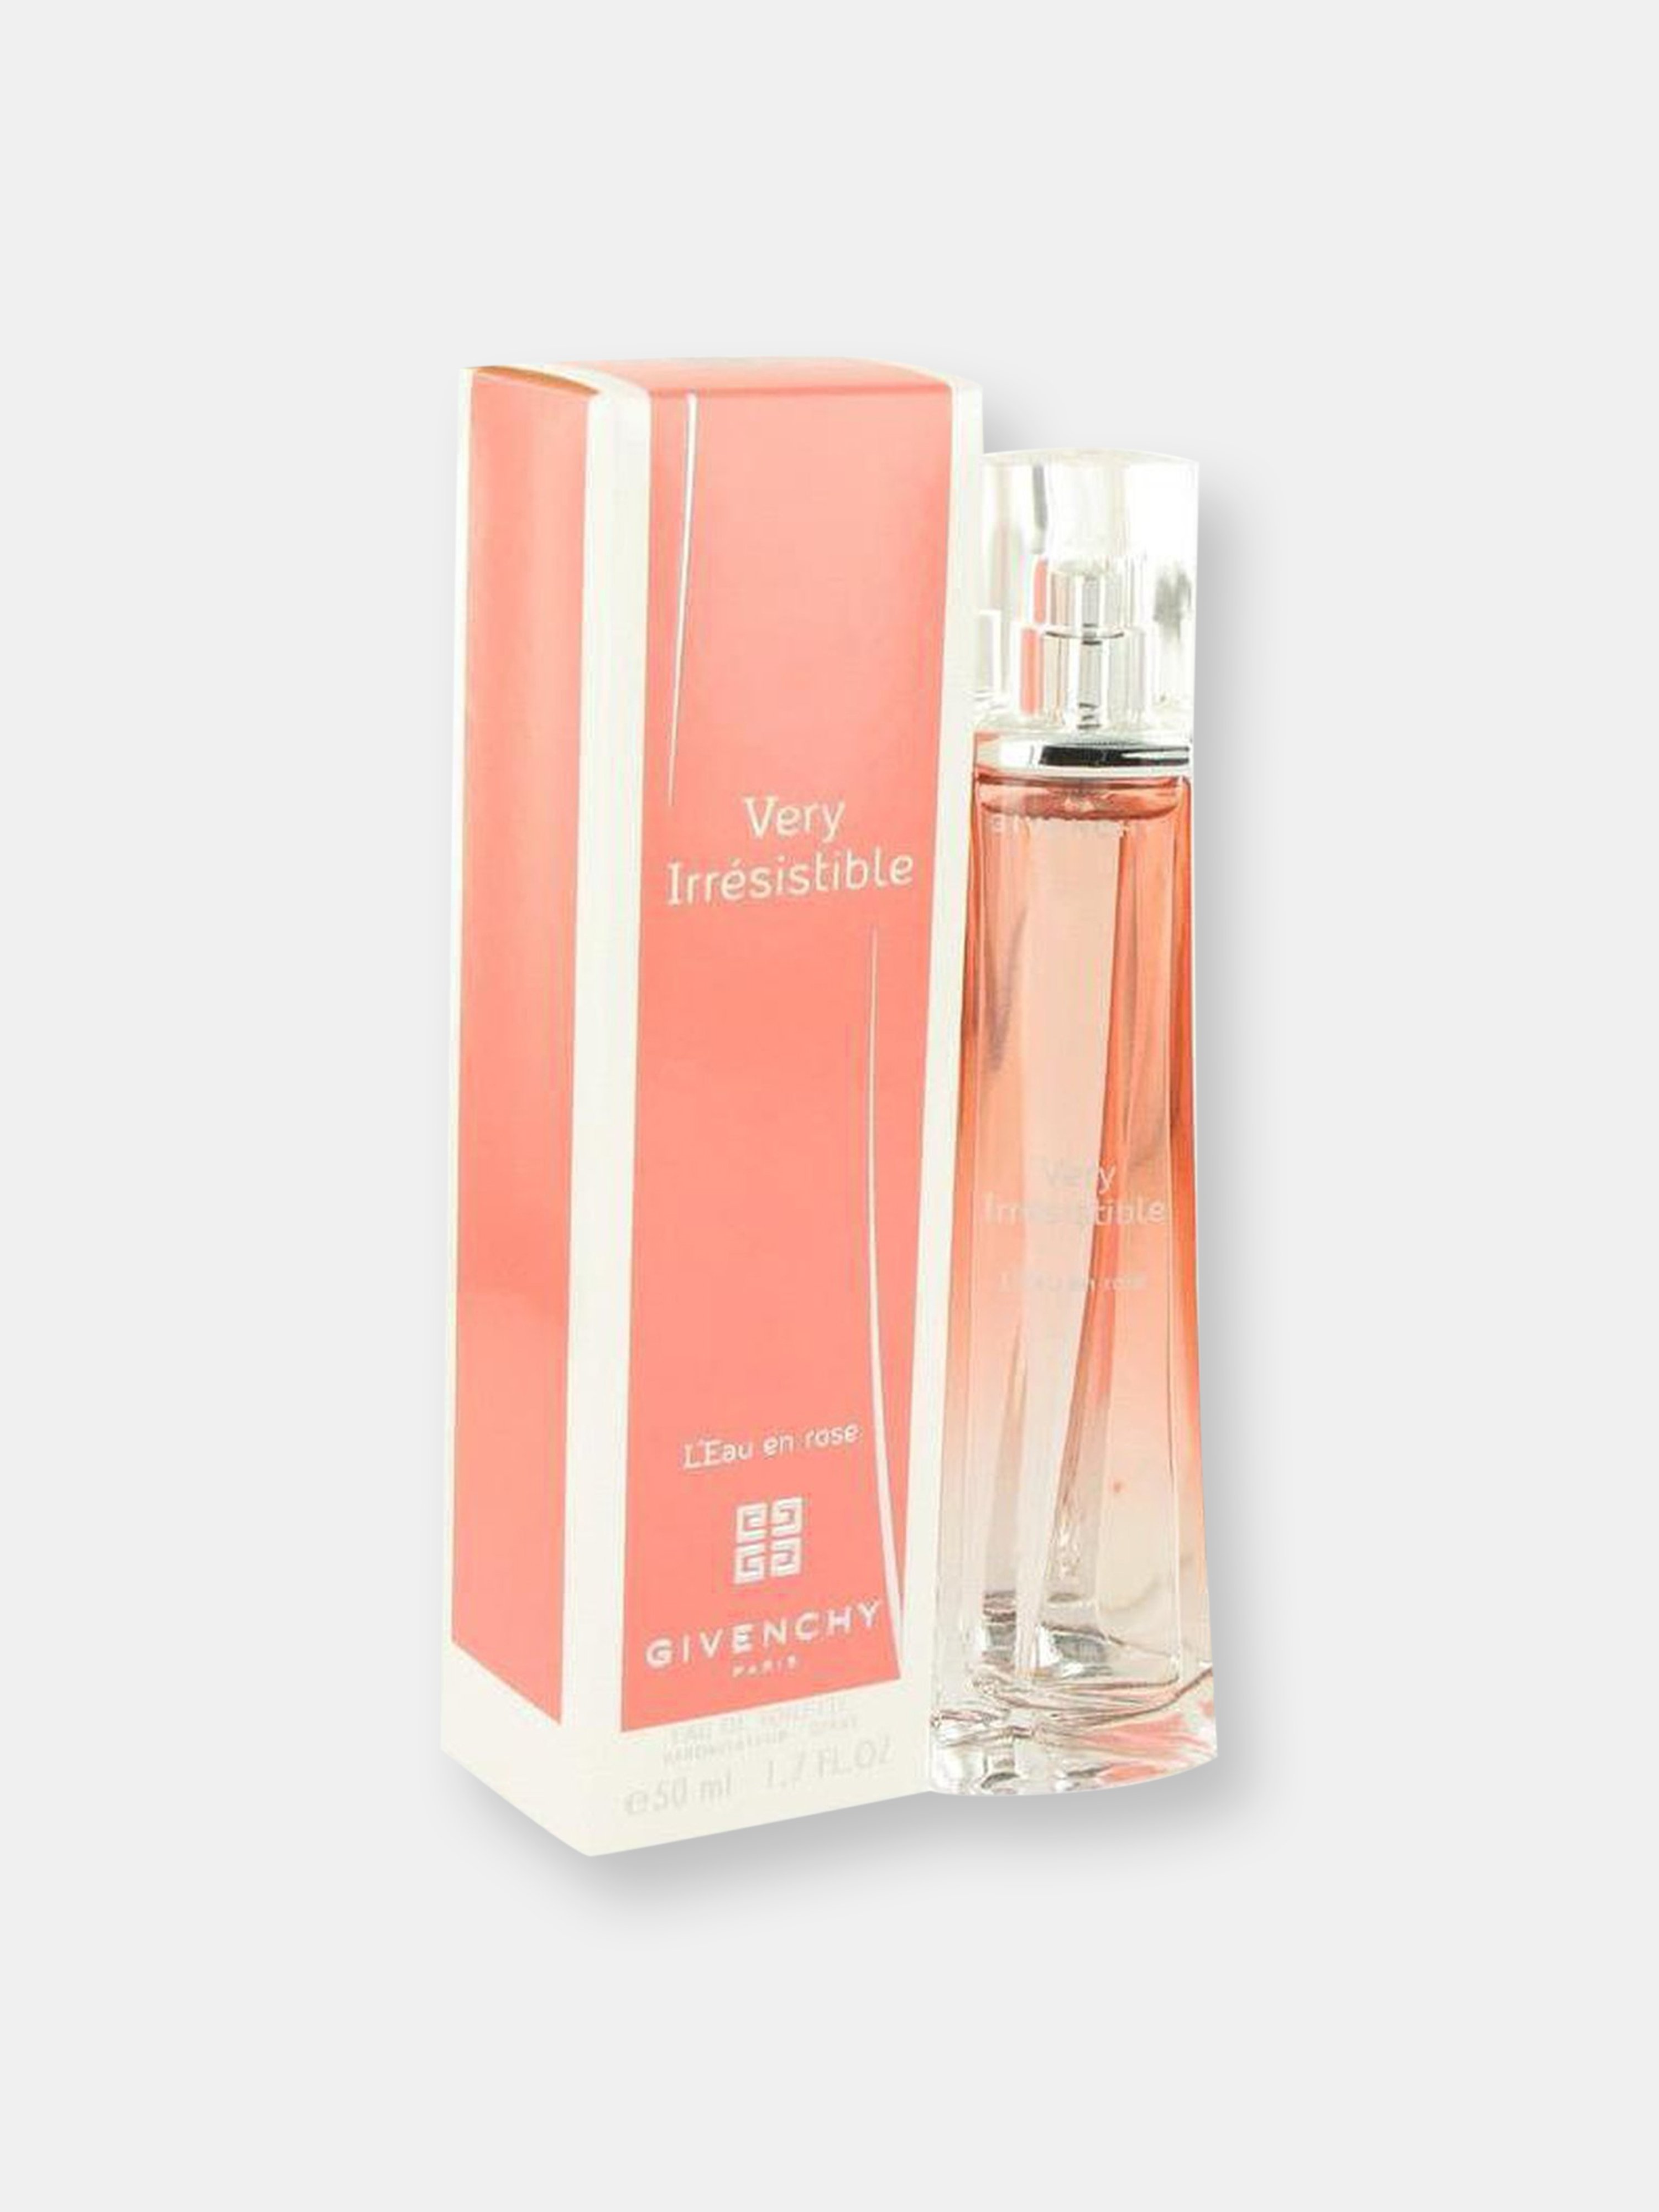 Royall Fragrances Givenchy Very Irresistible L'eau En Rose By Givenchy Eau De Toilette Spray 1.7 oz